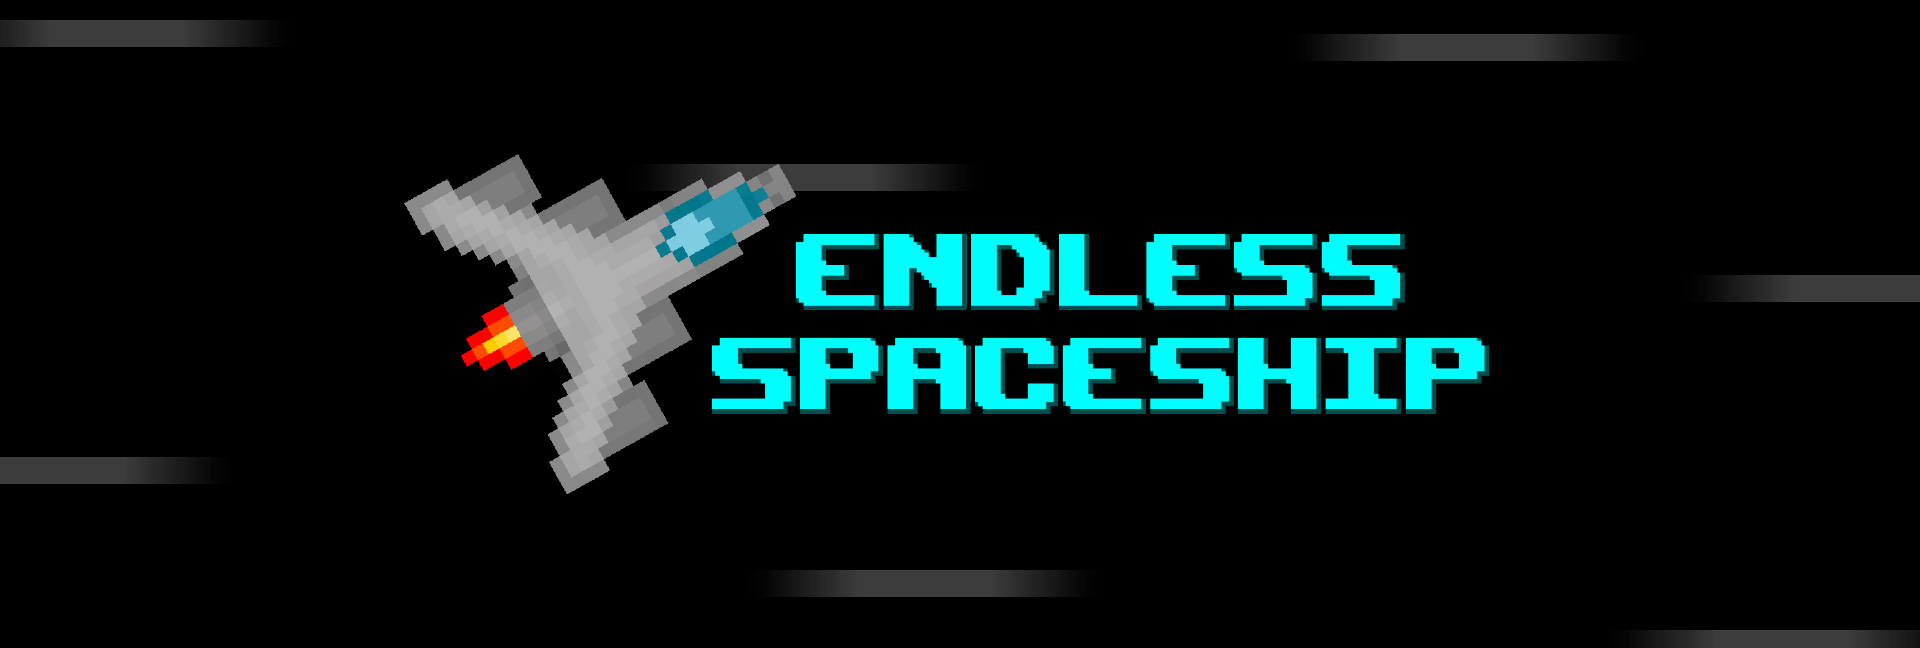 Endless Spaceship